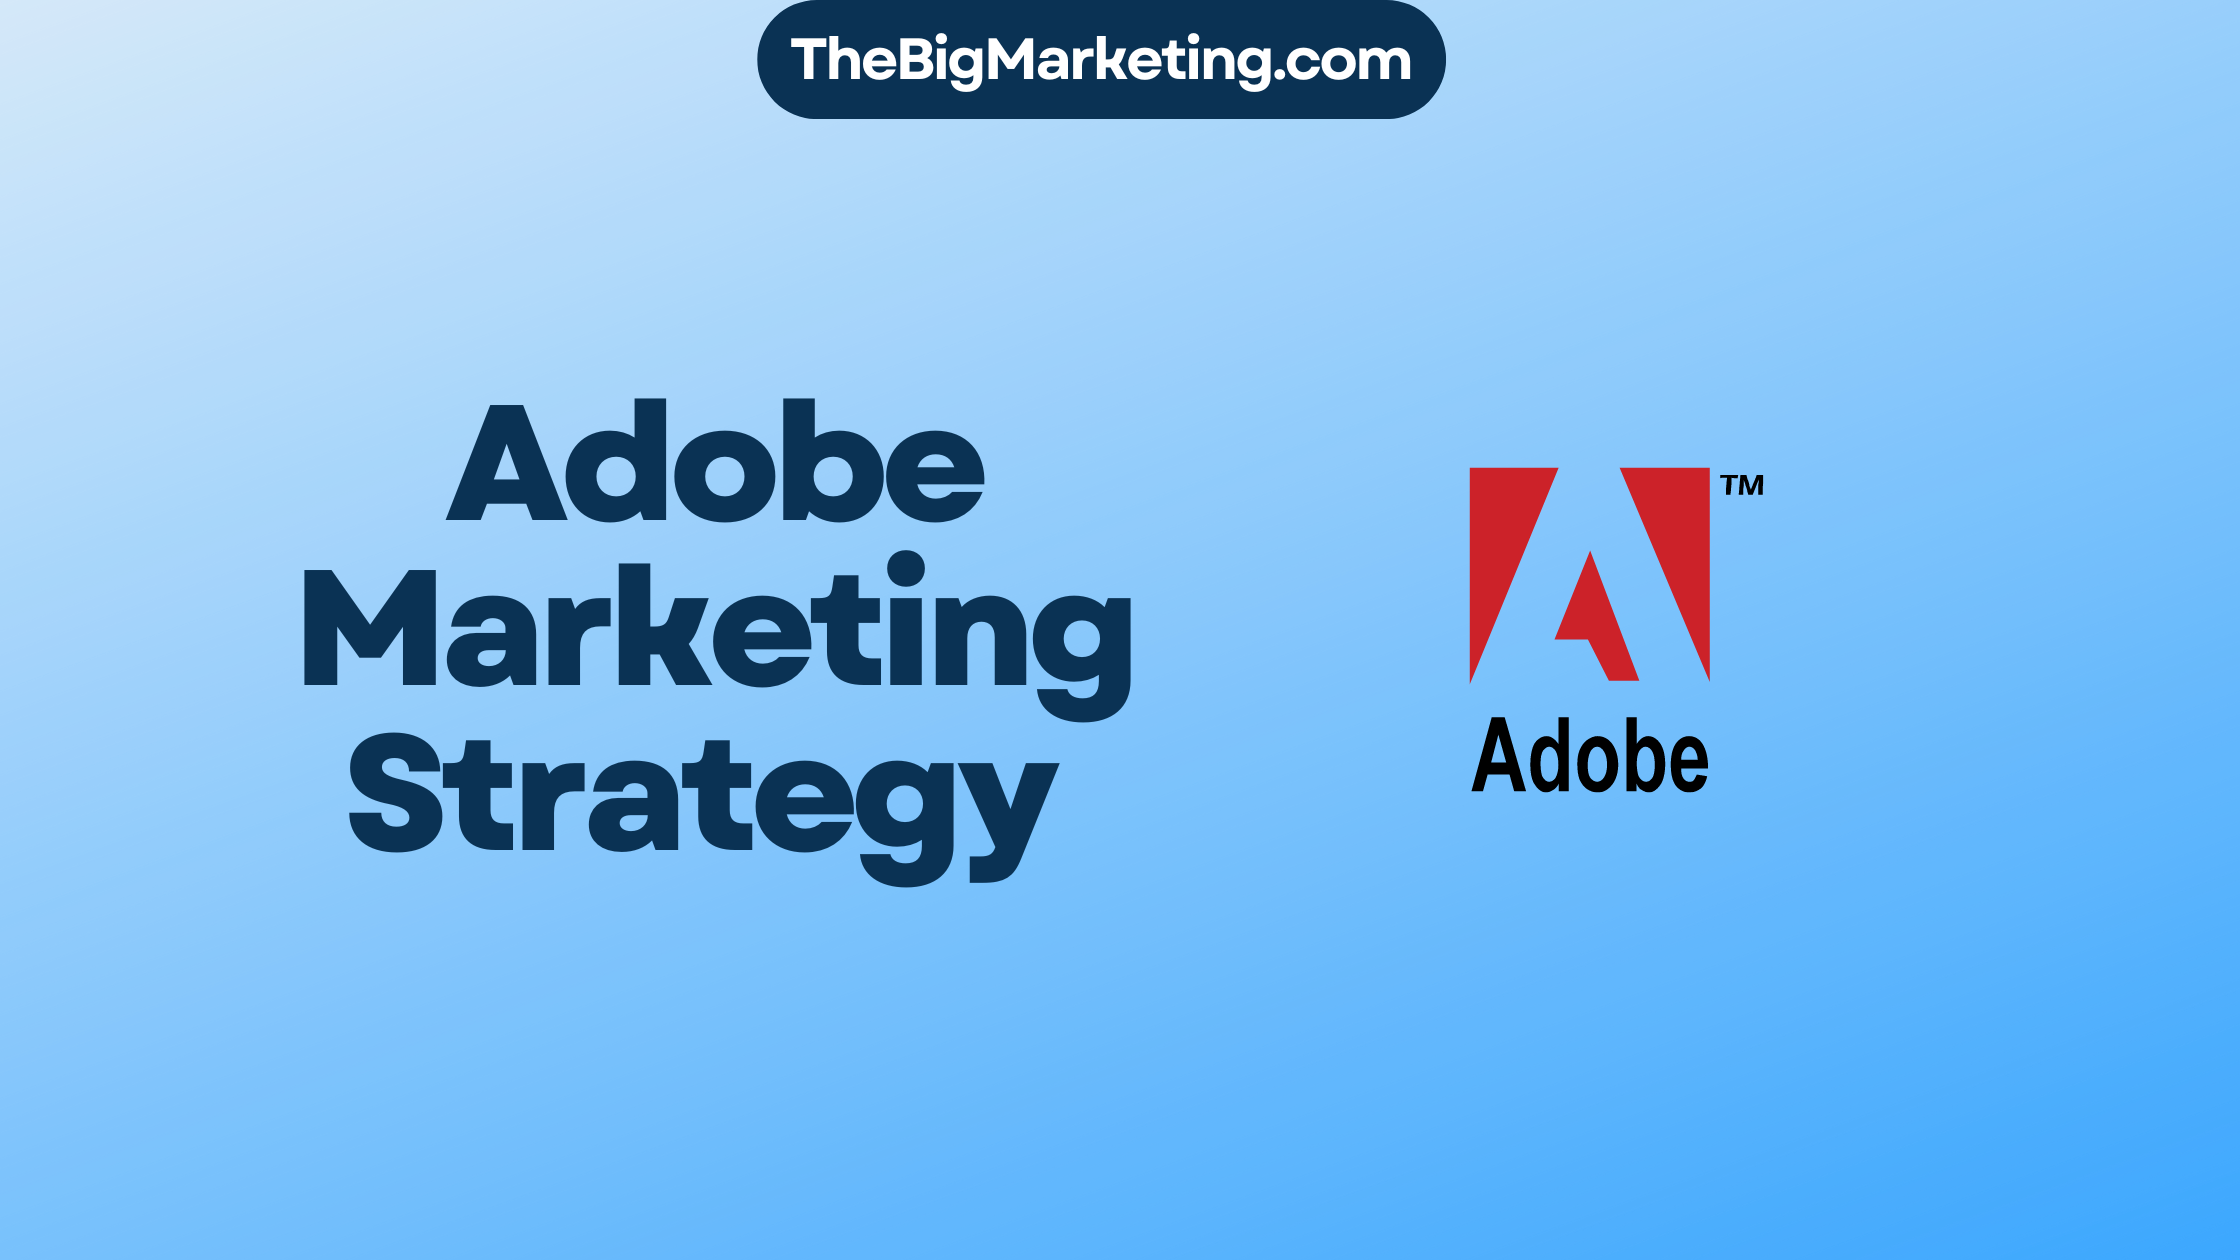 Adobe Marketing Strategy